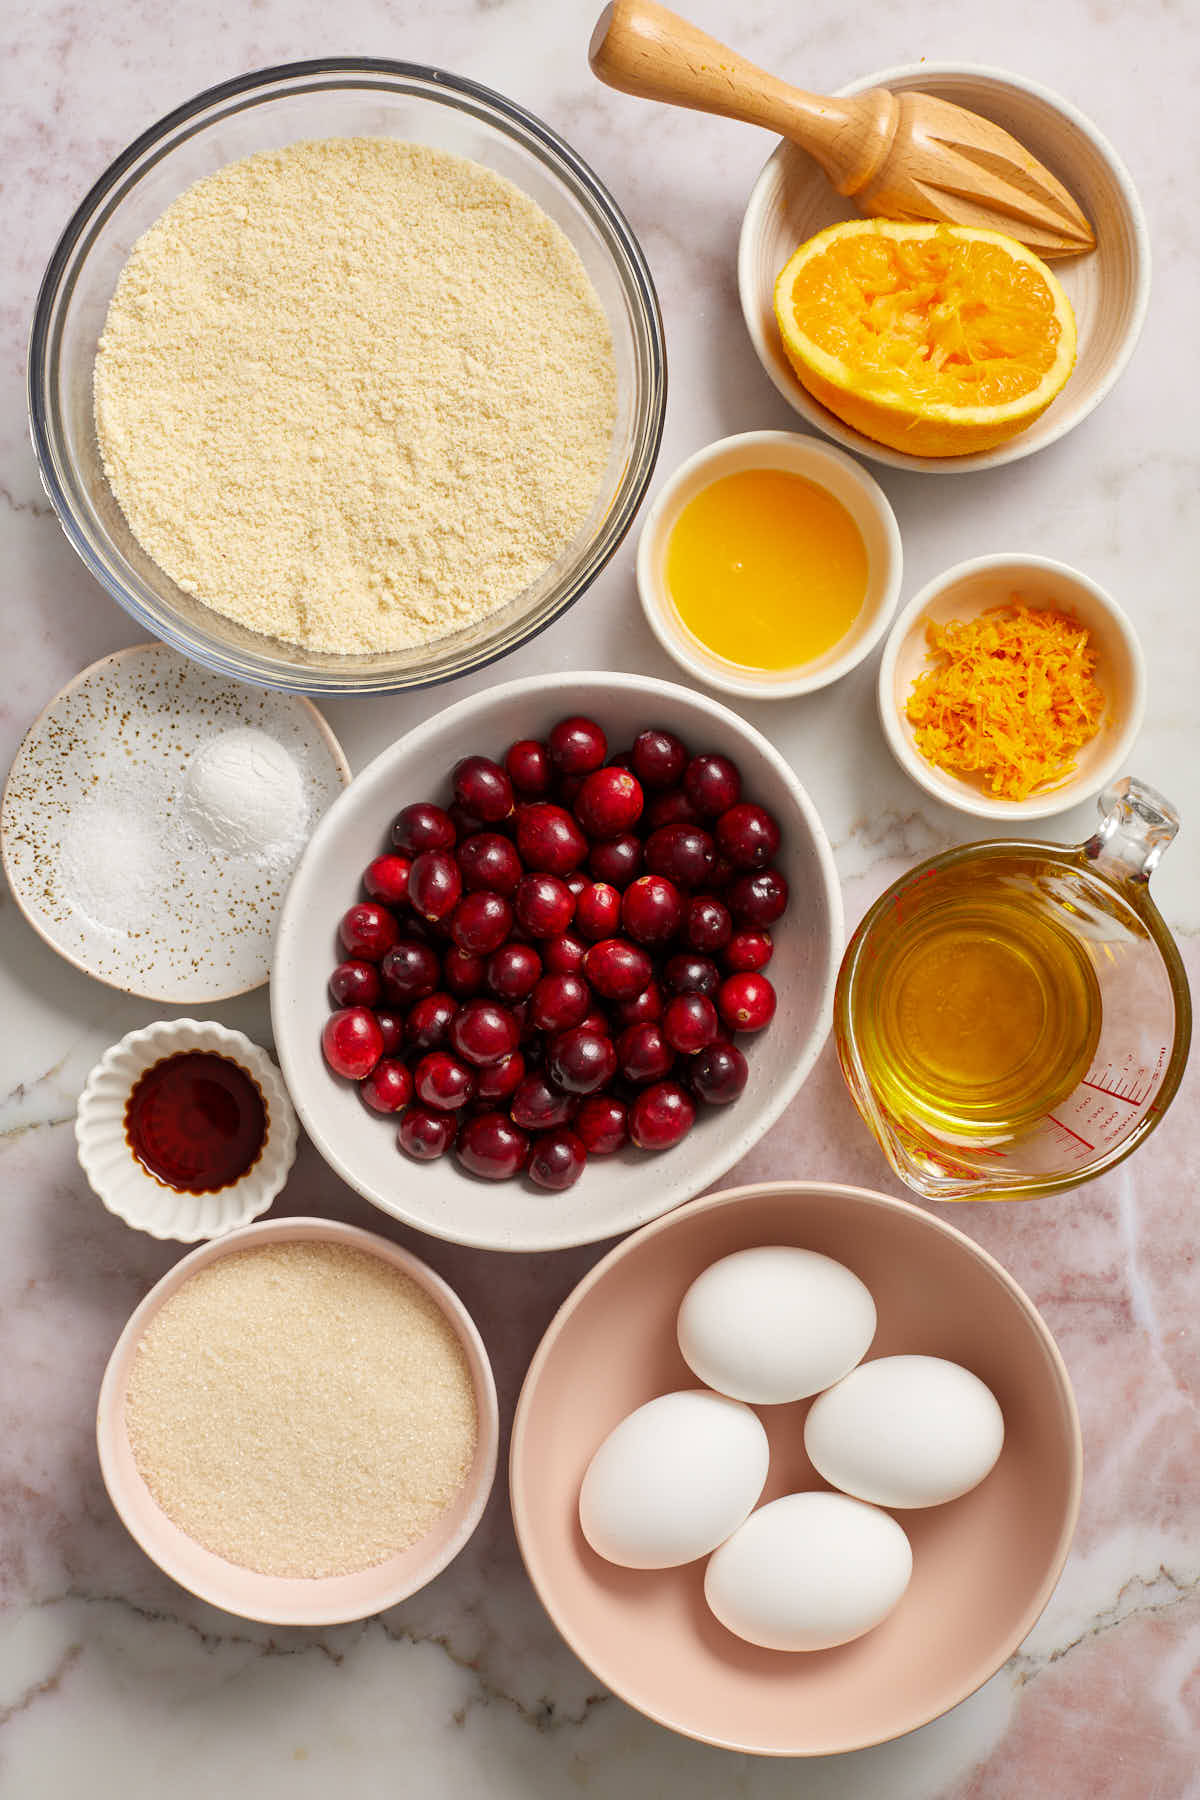 Ingredients to make almond flour cranberry orange bread arranged in individual bowls.